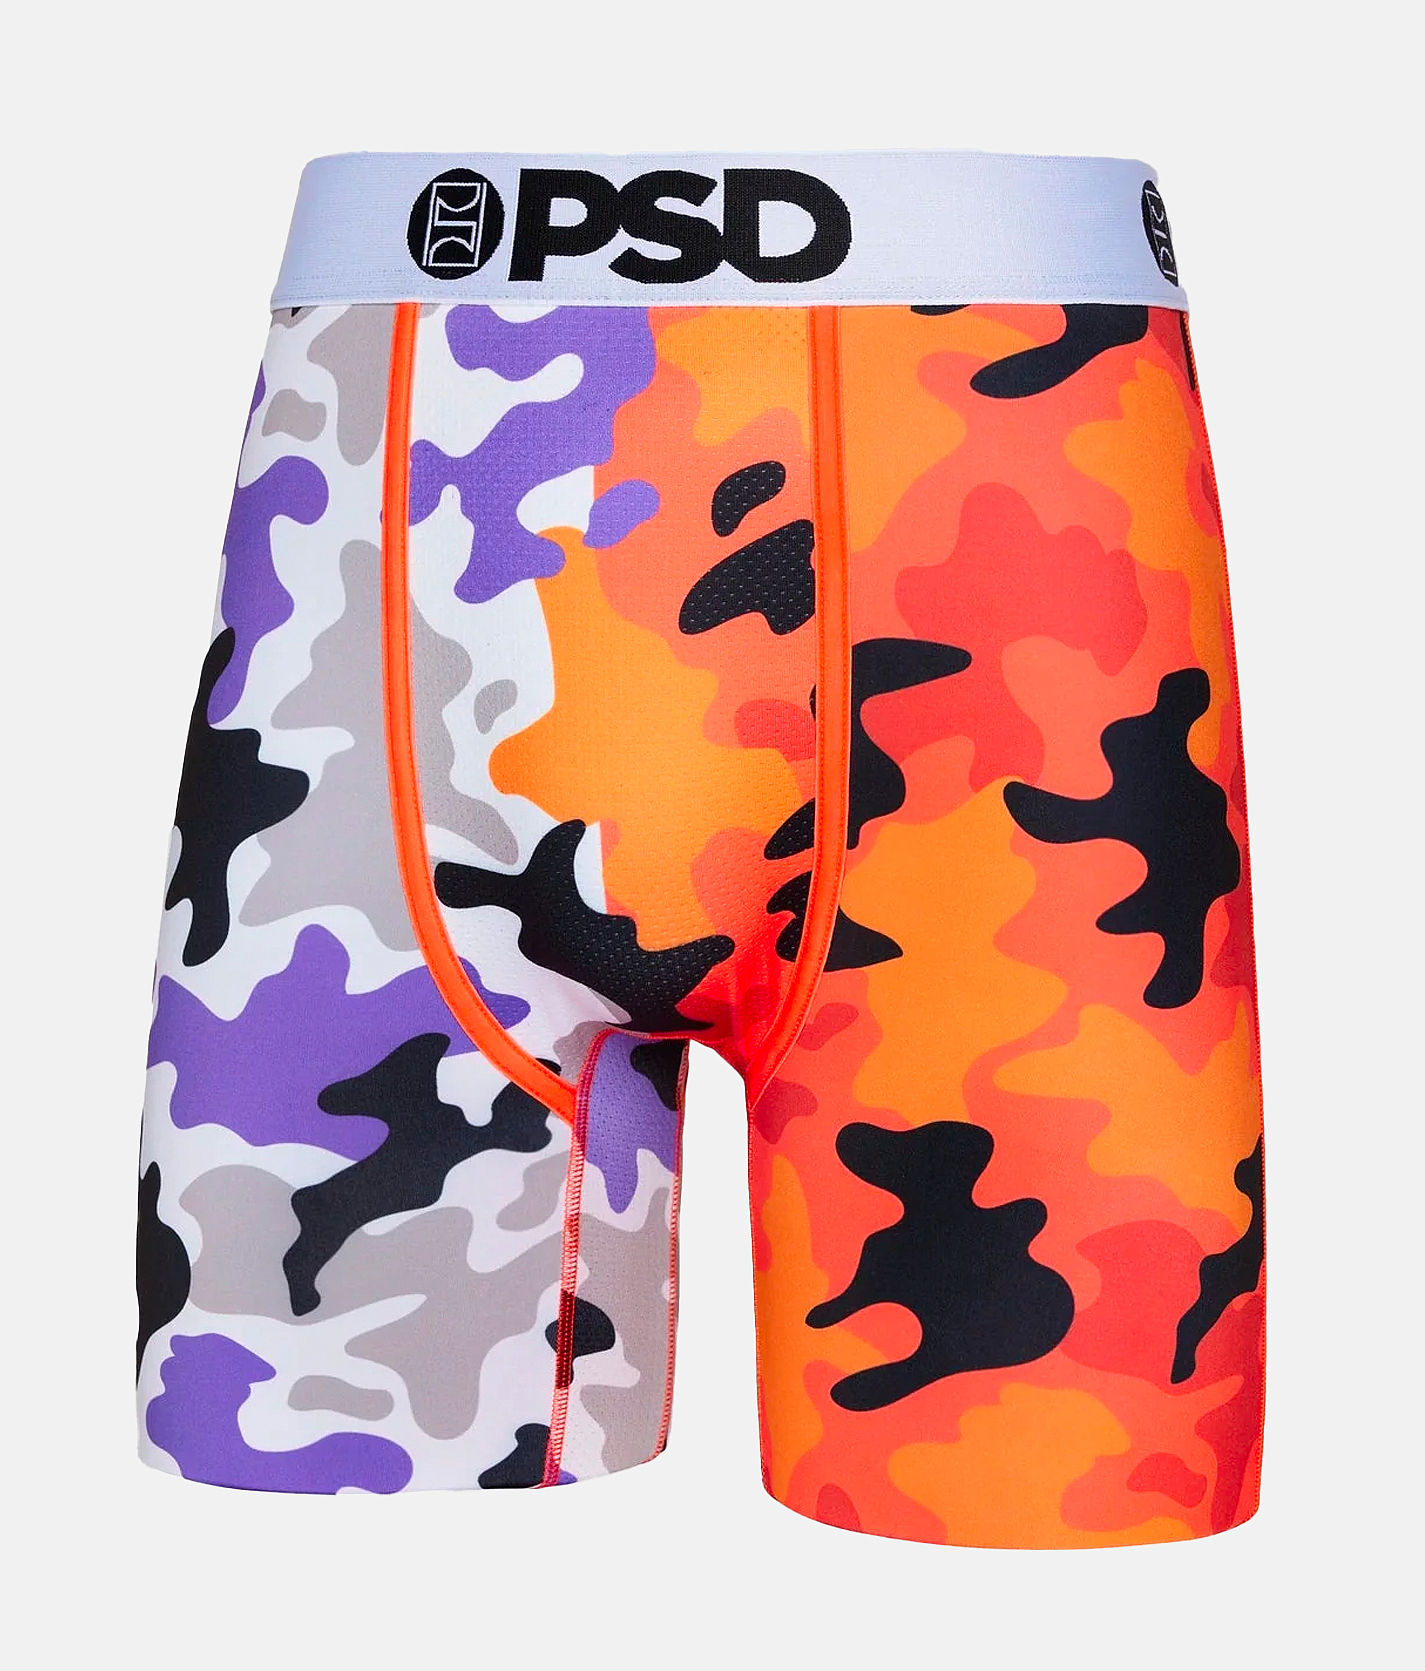  PSD Boy's Camo Split Yth Boxer Briefs, Multi, S